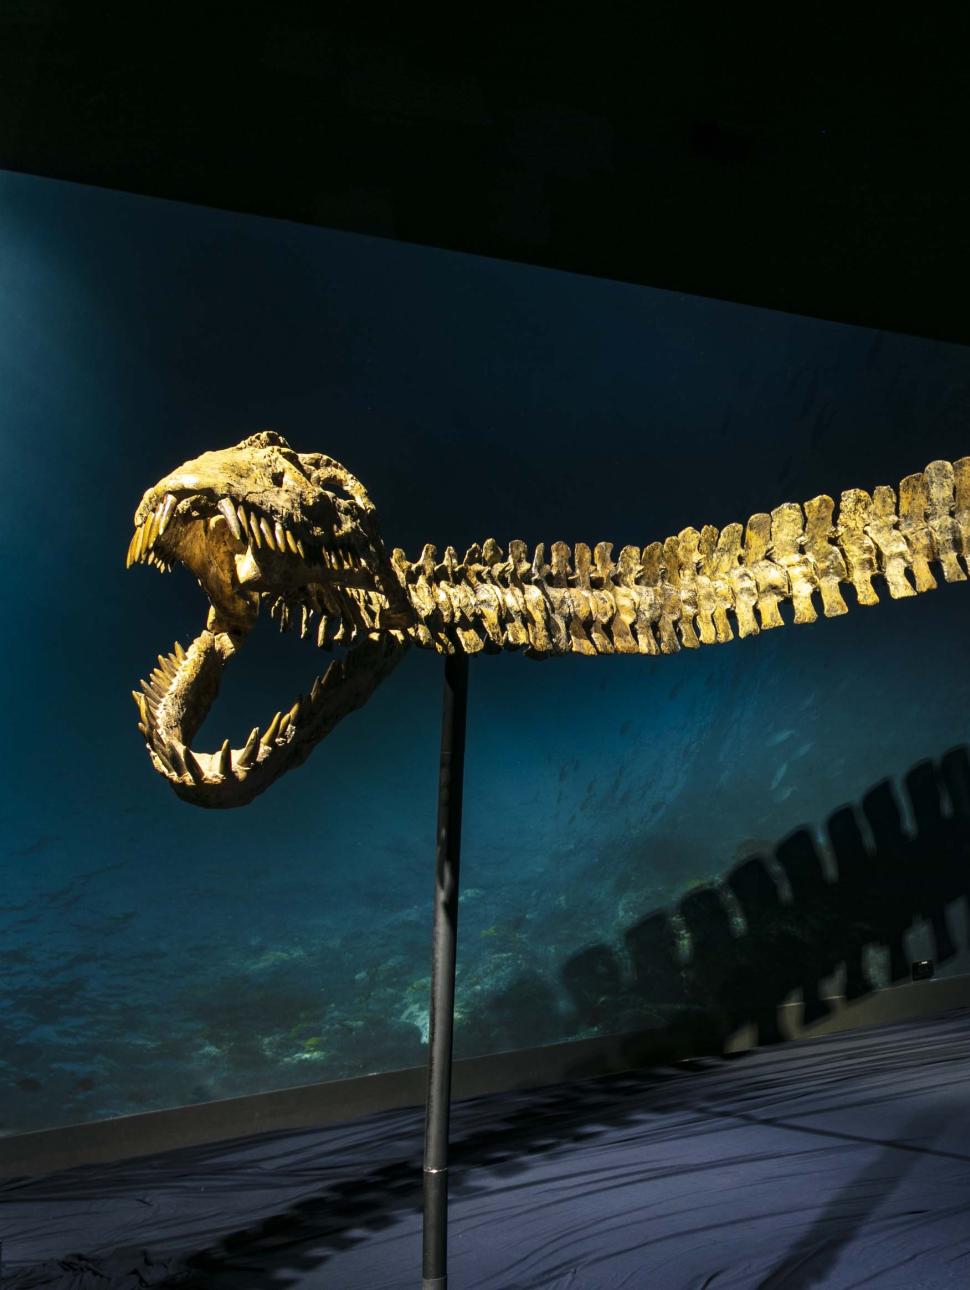 Giant prehistoric fish spine